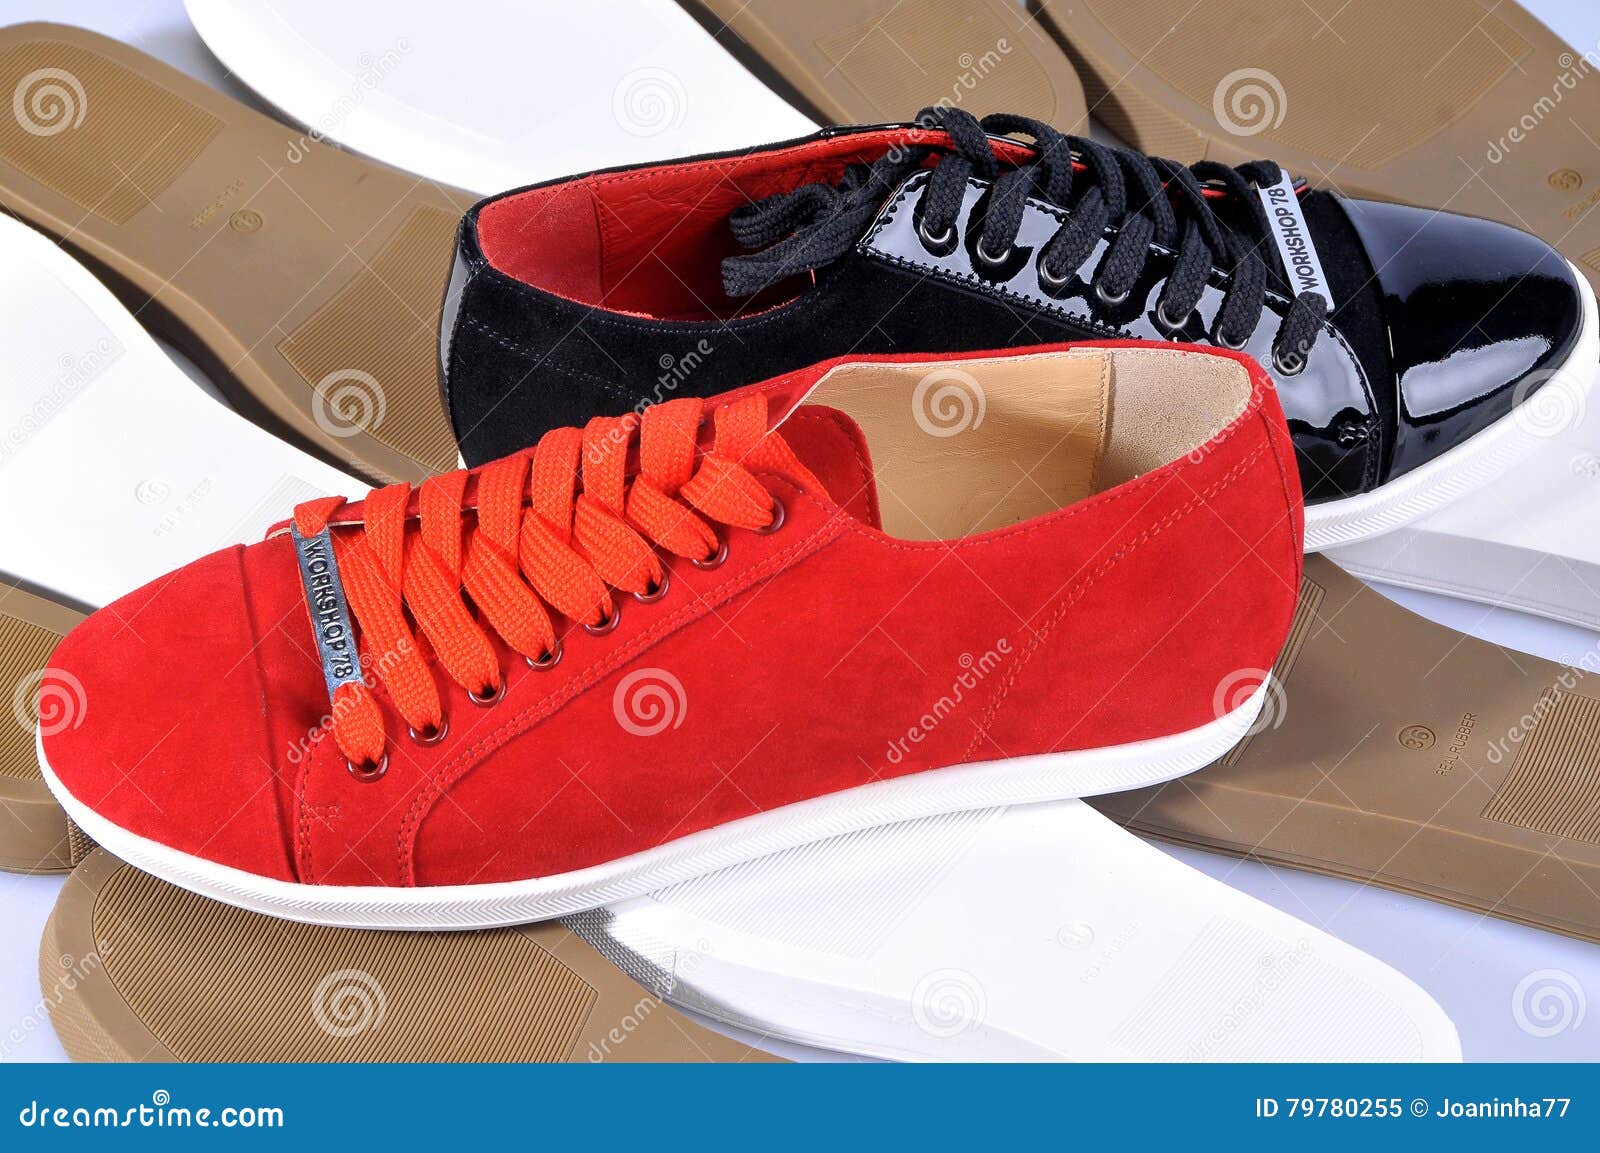 Pair Red Black Luxurious Leather Shoes Handmade Ukraine Kiev August Brand Name Illustrative Editorial 79780255 